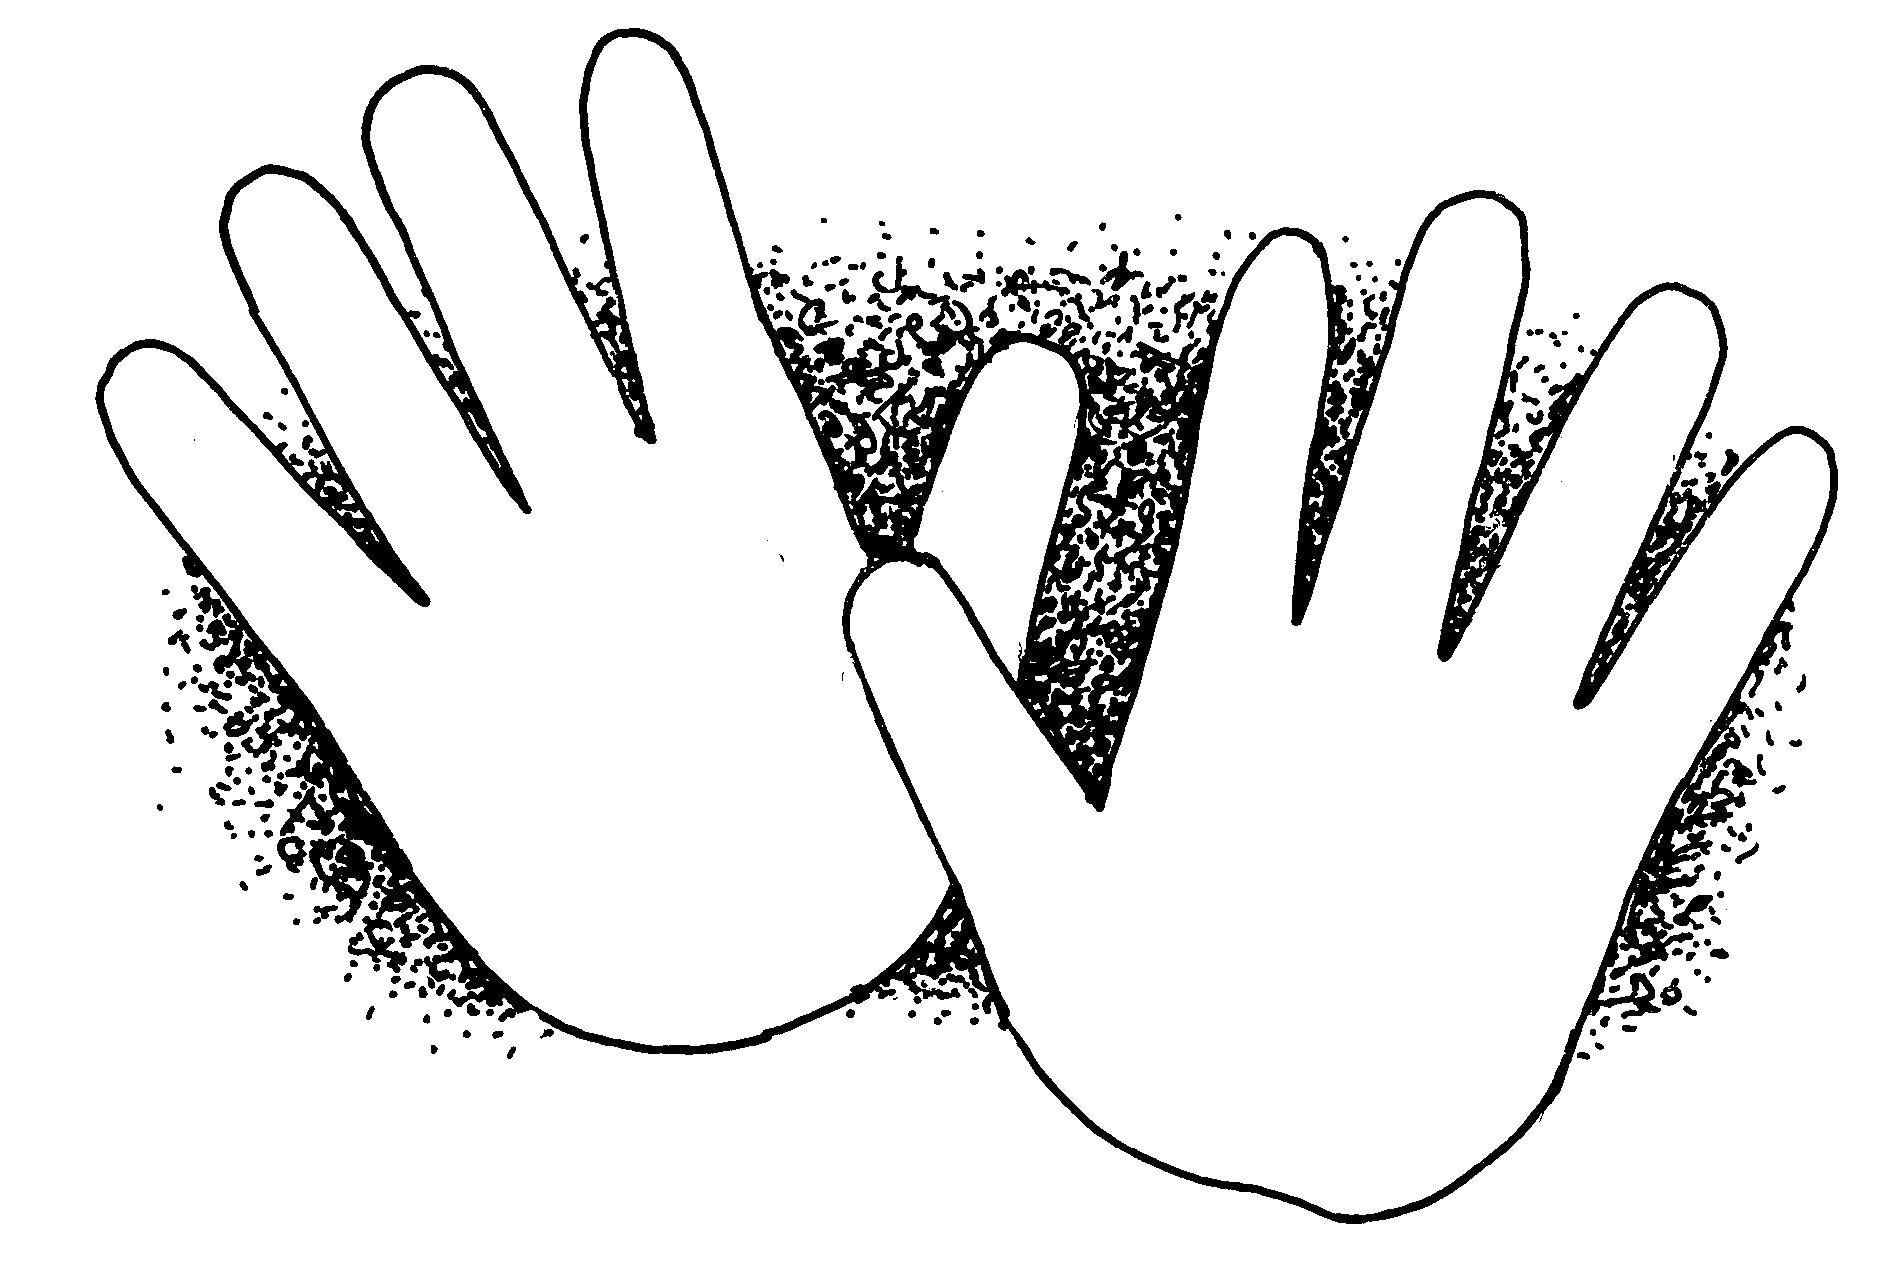 Название: Раскраска Отпечатки рук. Категория: Контур руки и ладошки для вырезания. Теги: Руки.